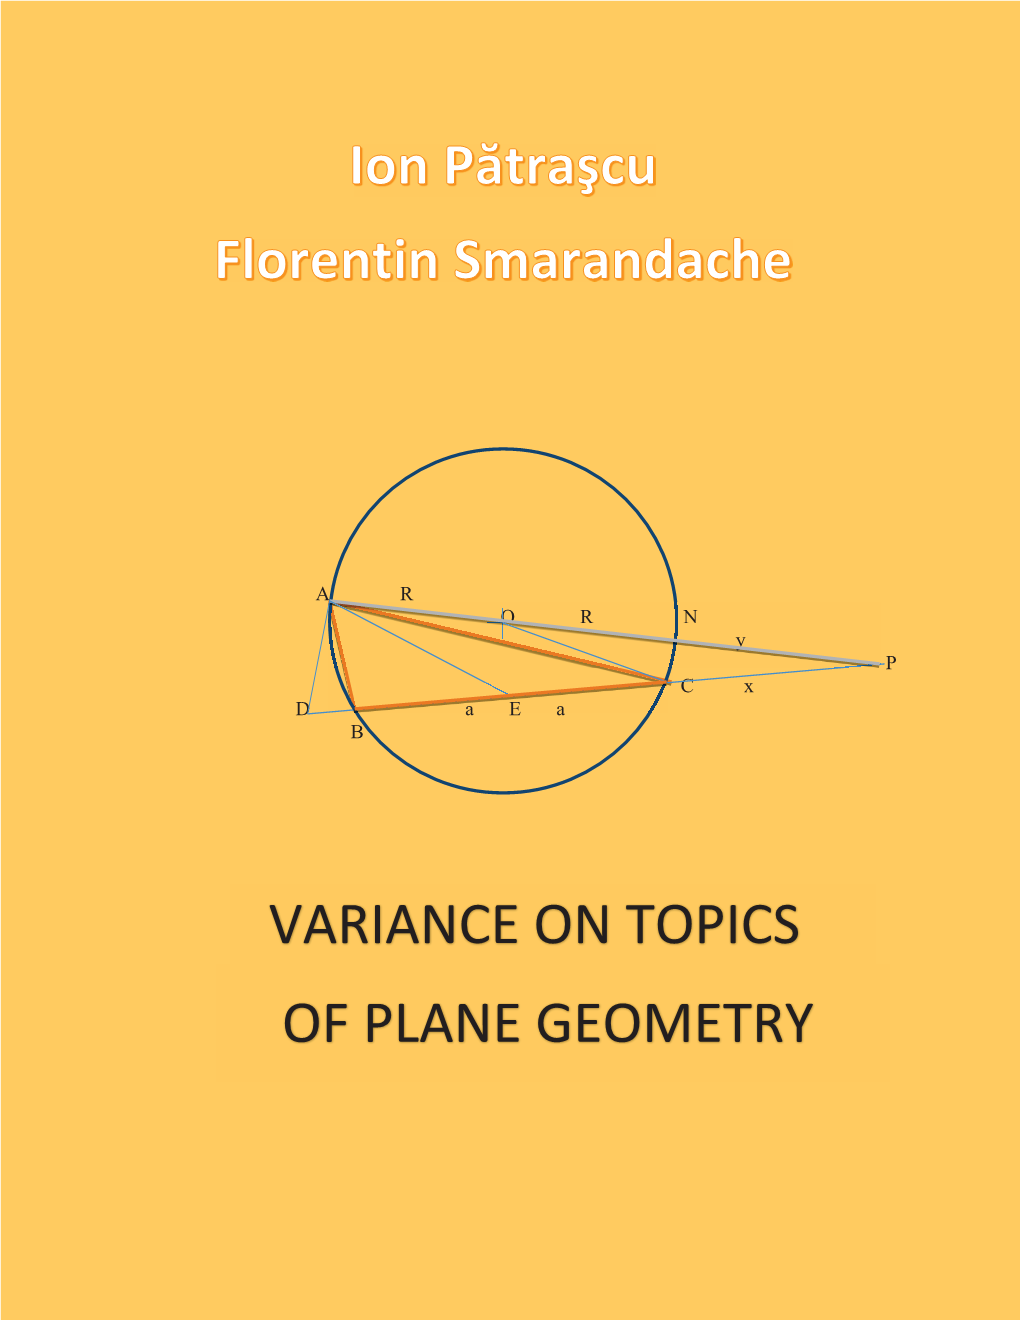 Variance on Topics of Plane Geometry